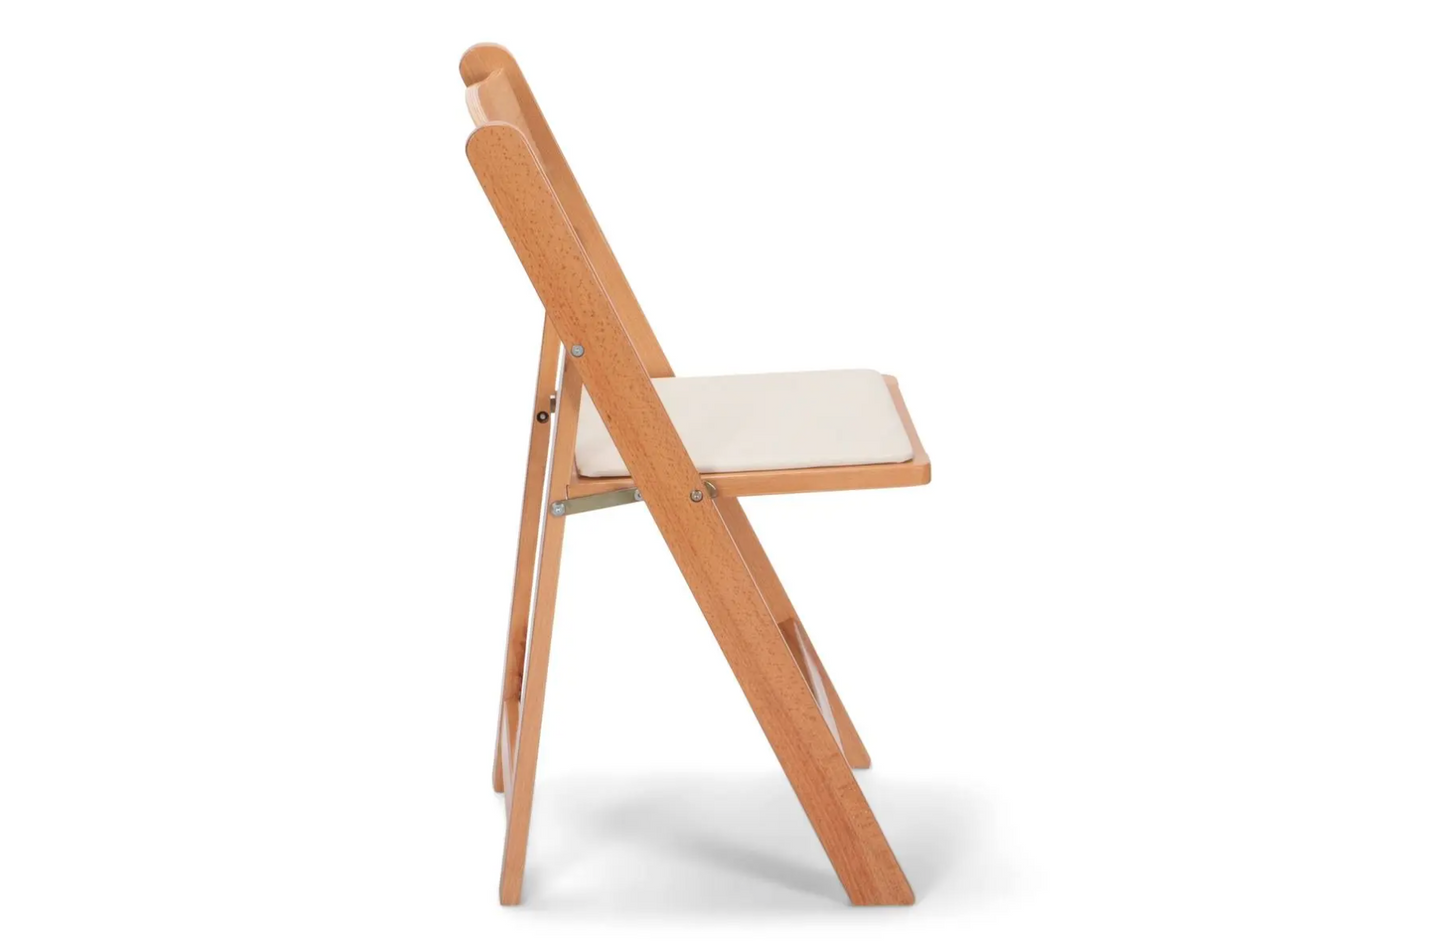 Natural Wood Folding Chair Rental - Orange County - Newport Beach